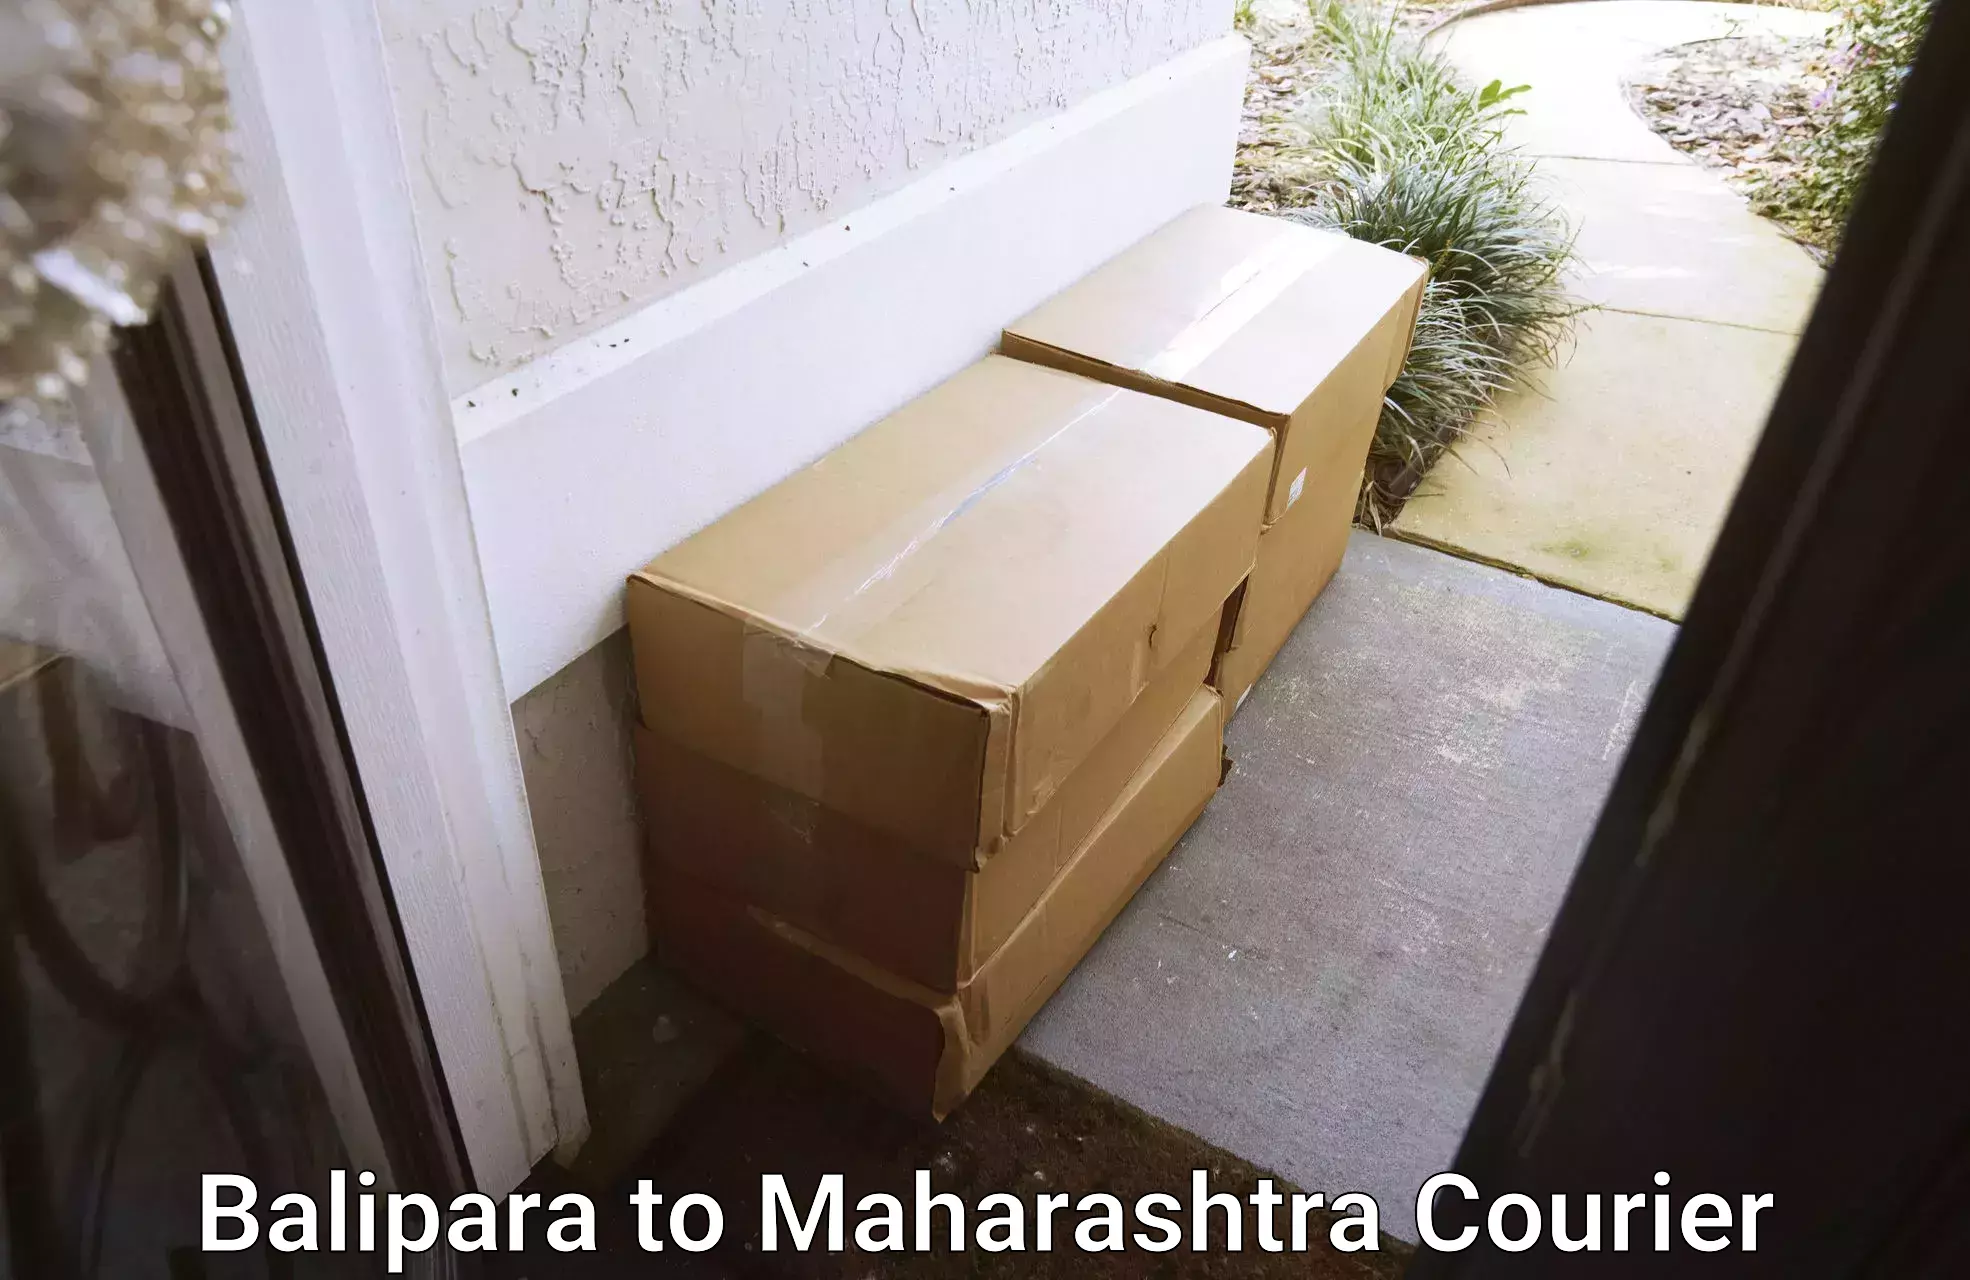 High-performance logistics Balipara to Maharashtra